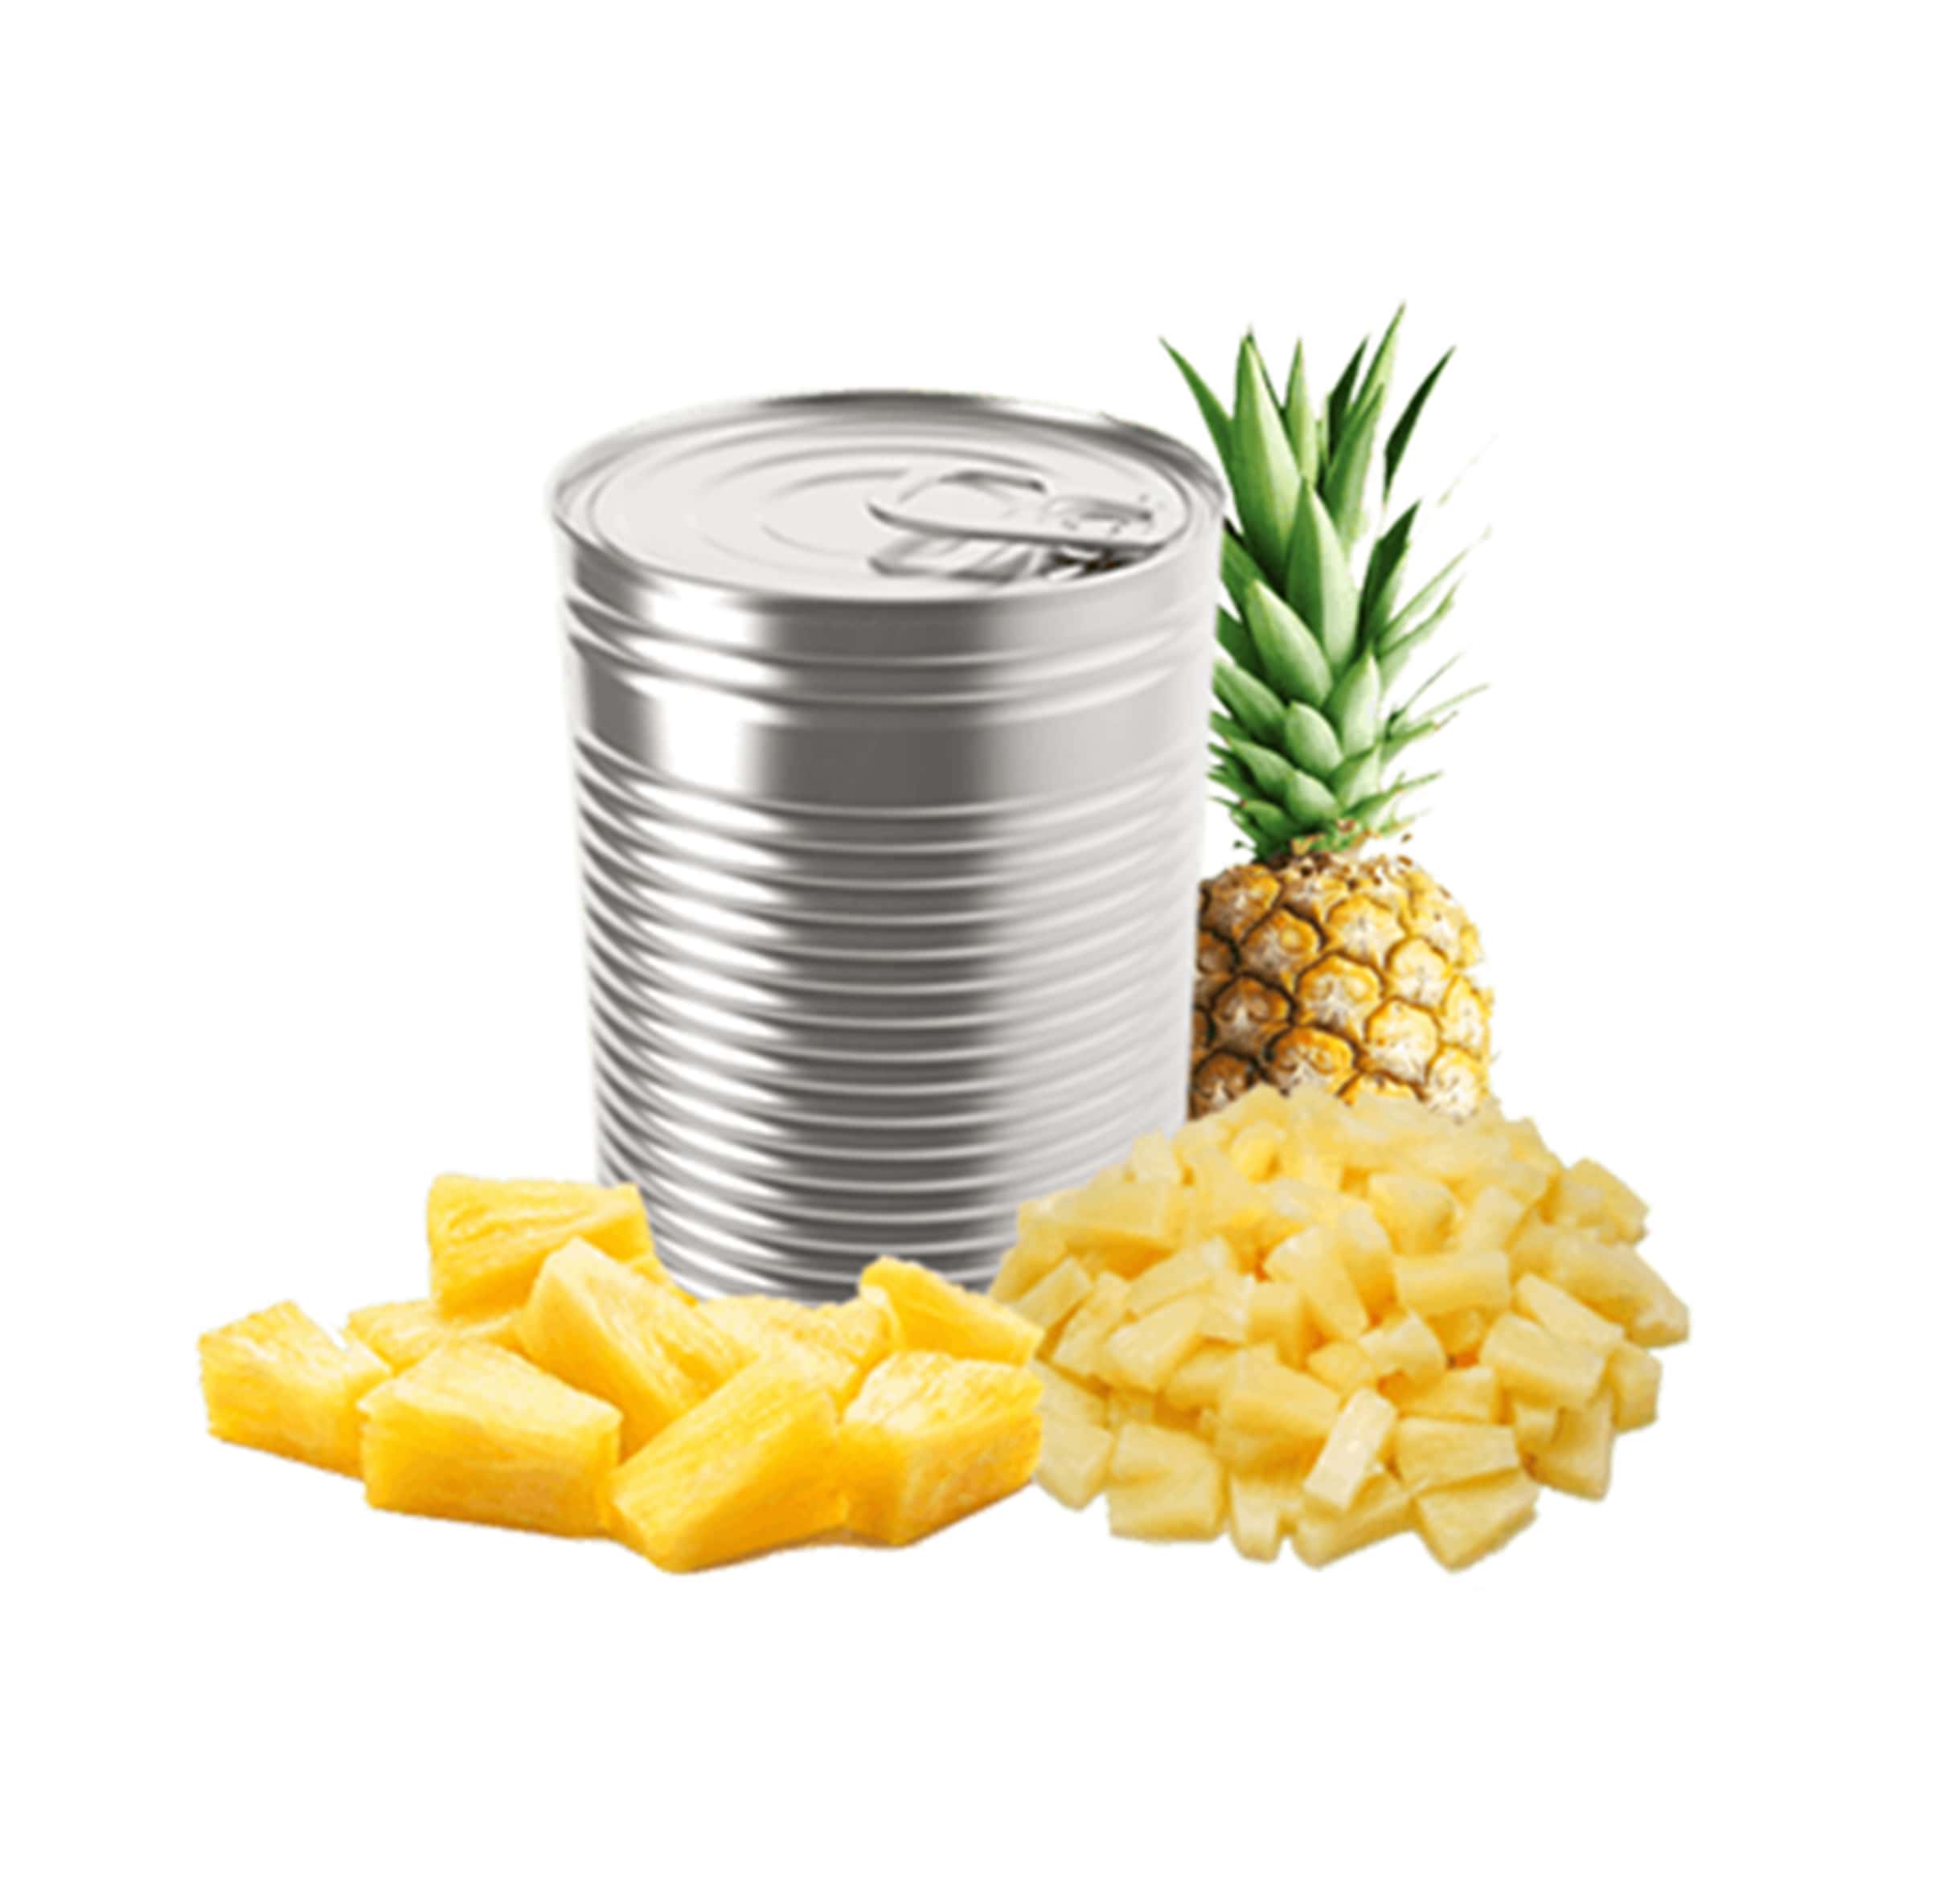 pineapple-slice